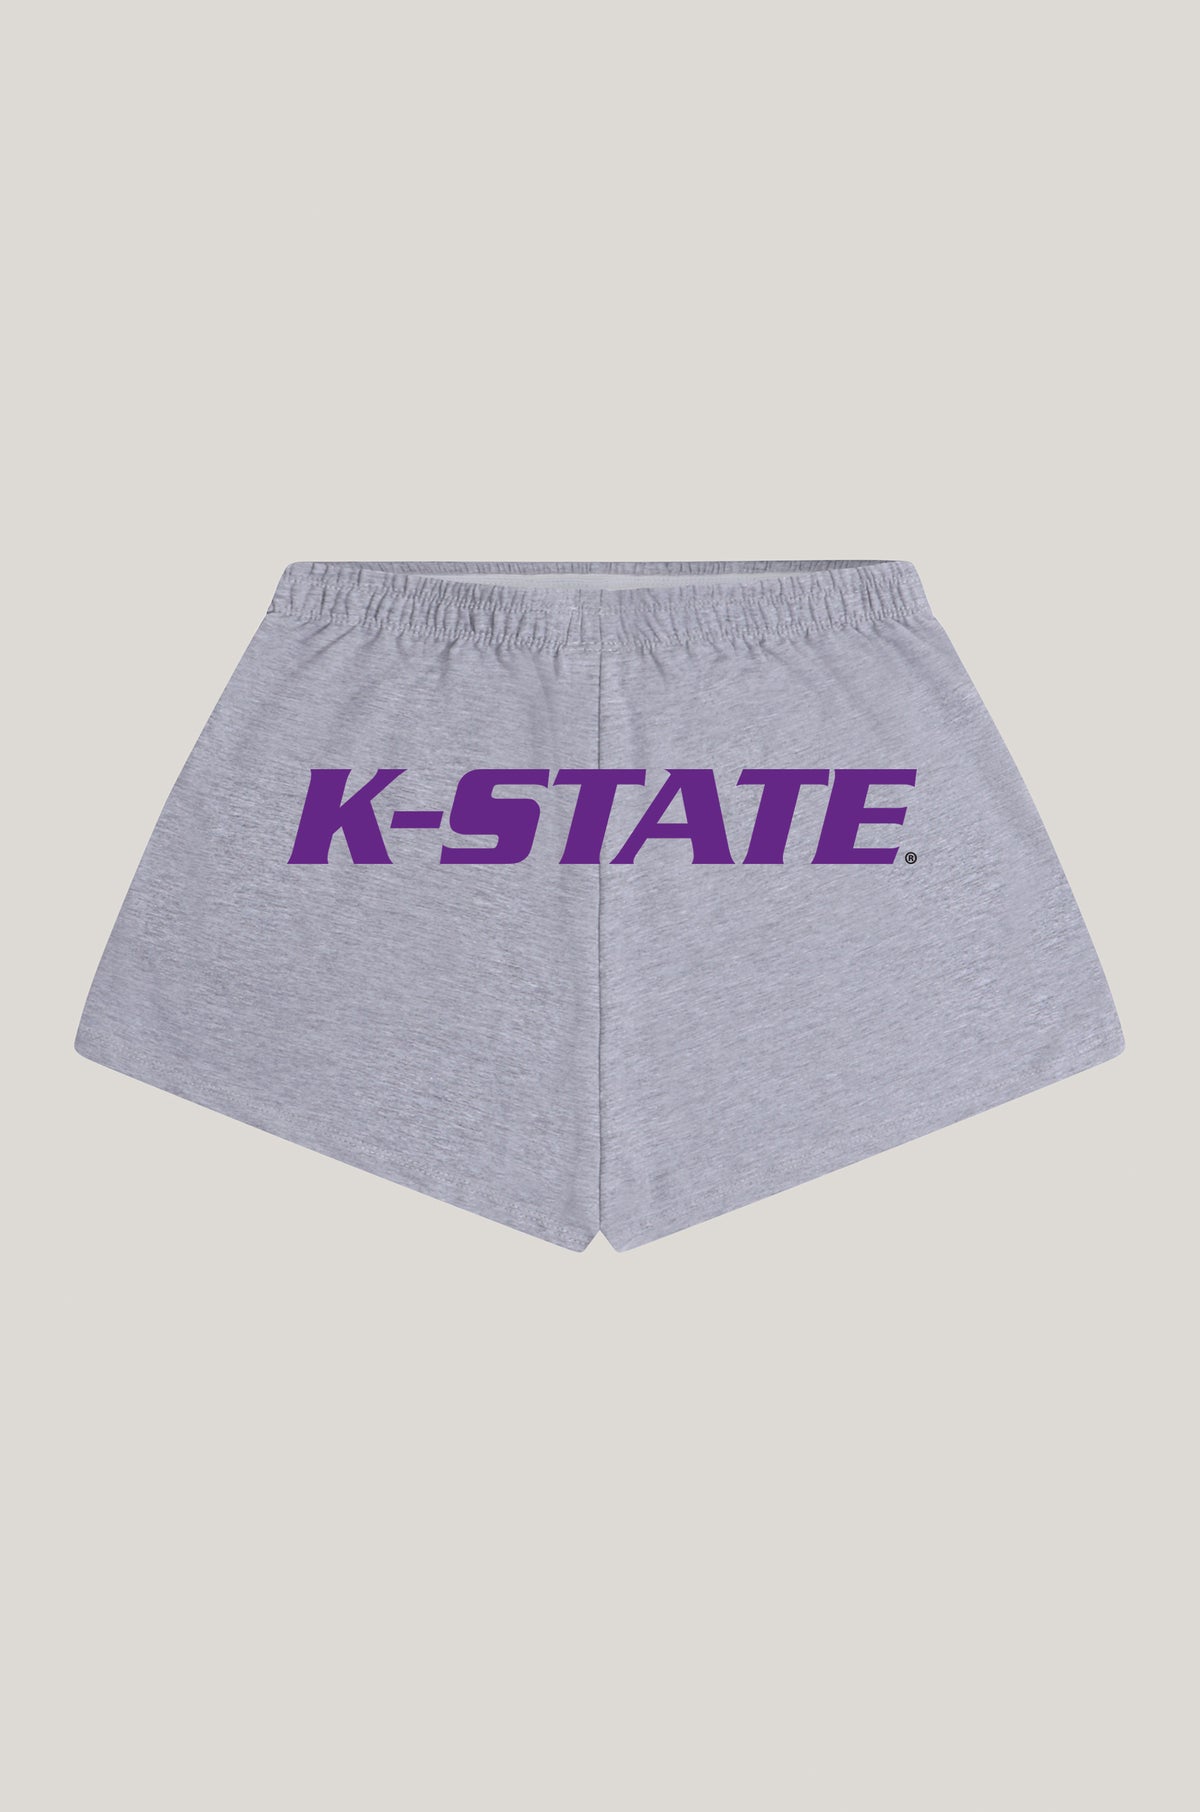 Kansas State Soffee Shorts